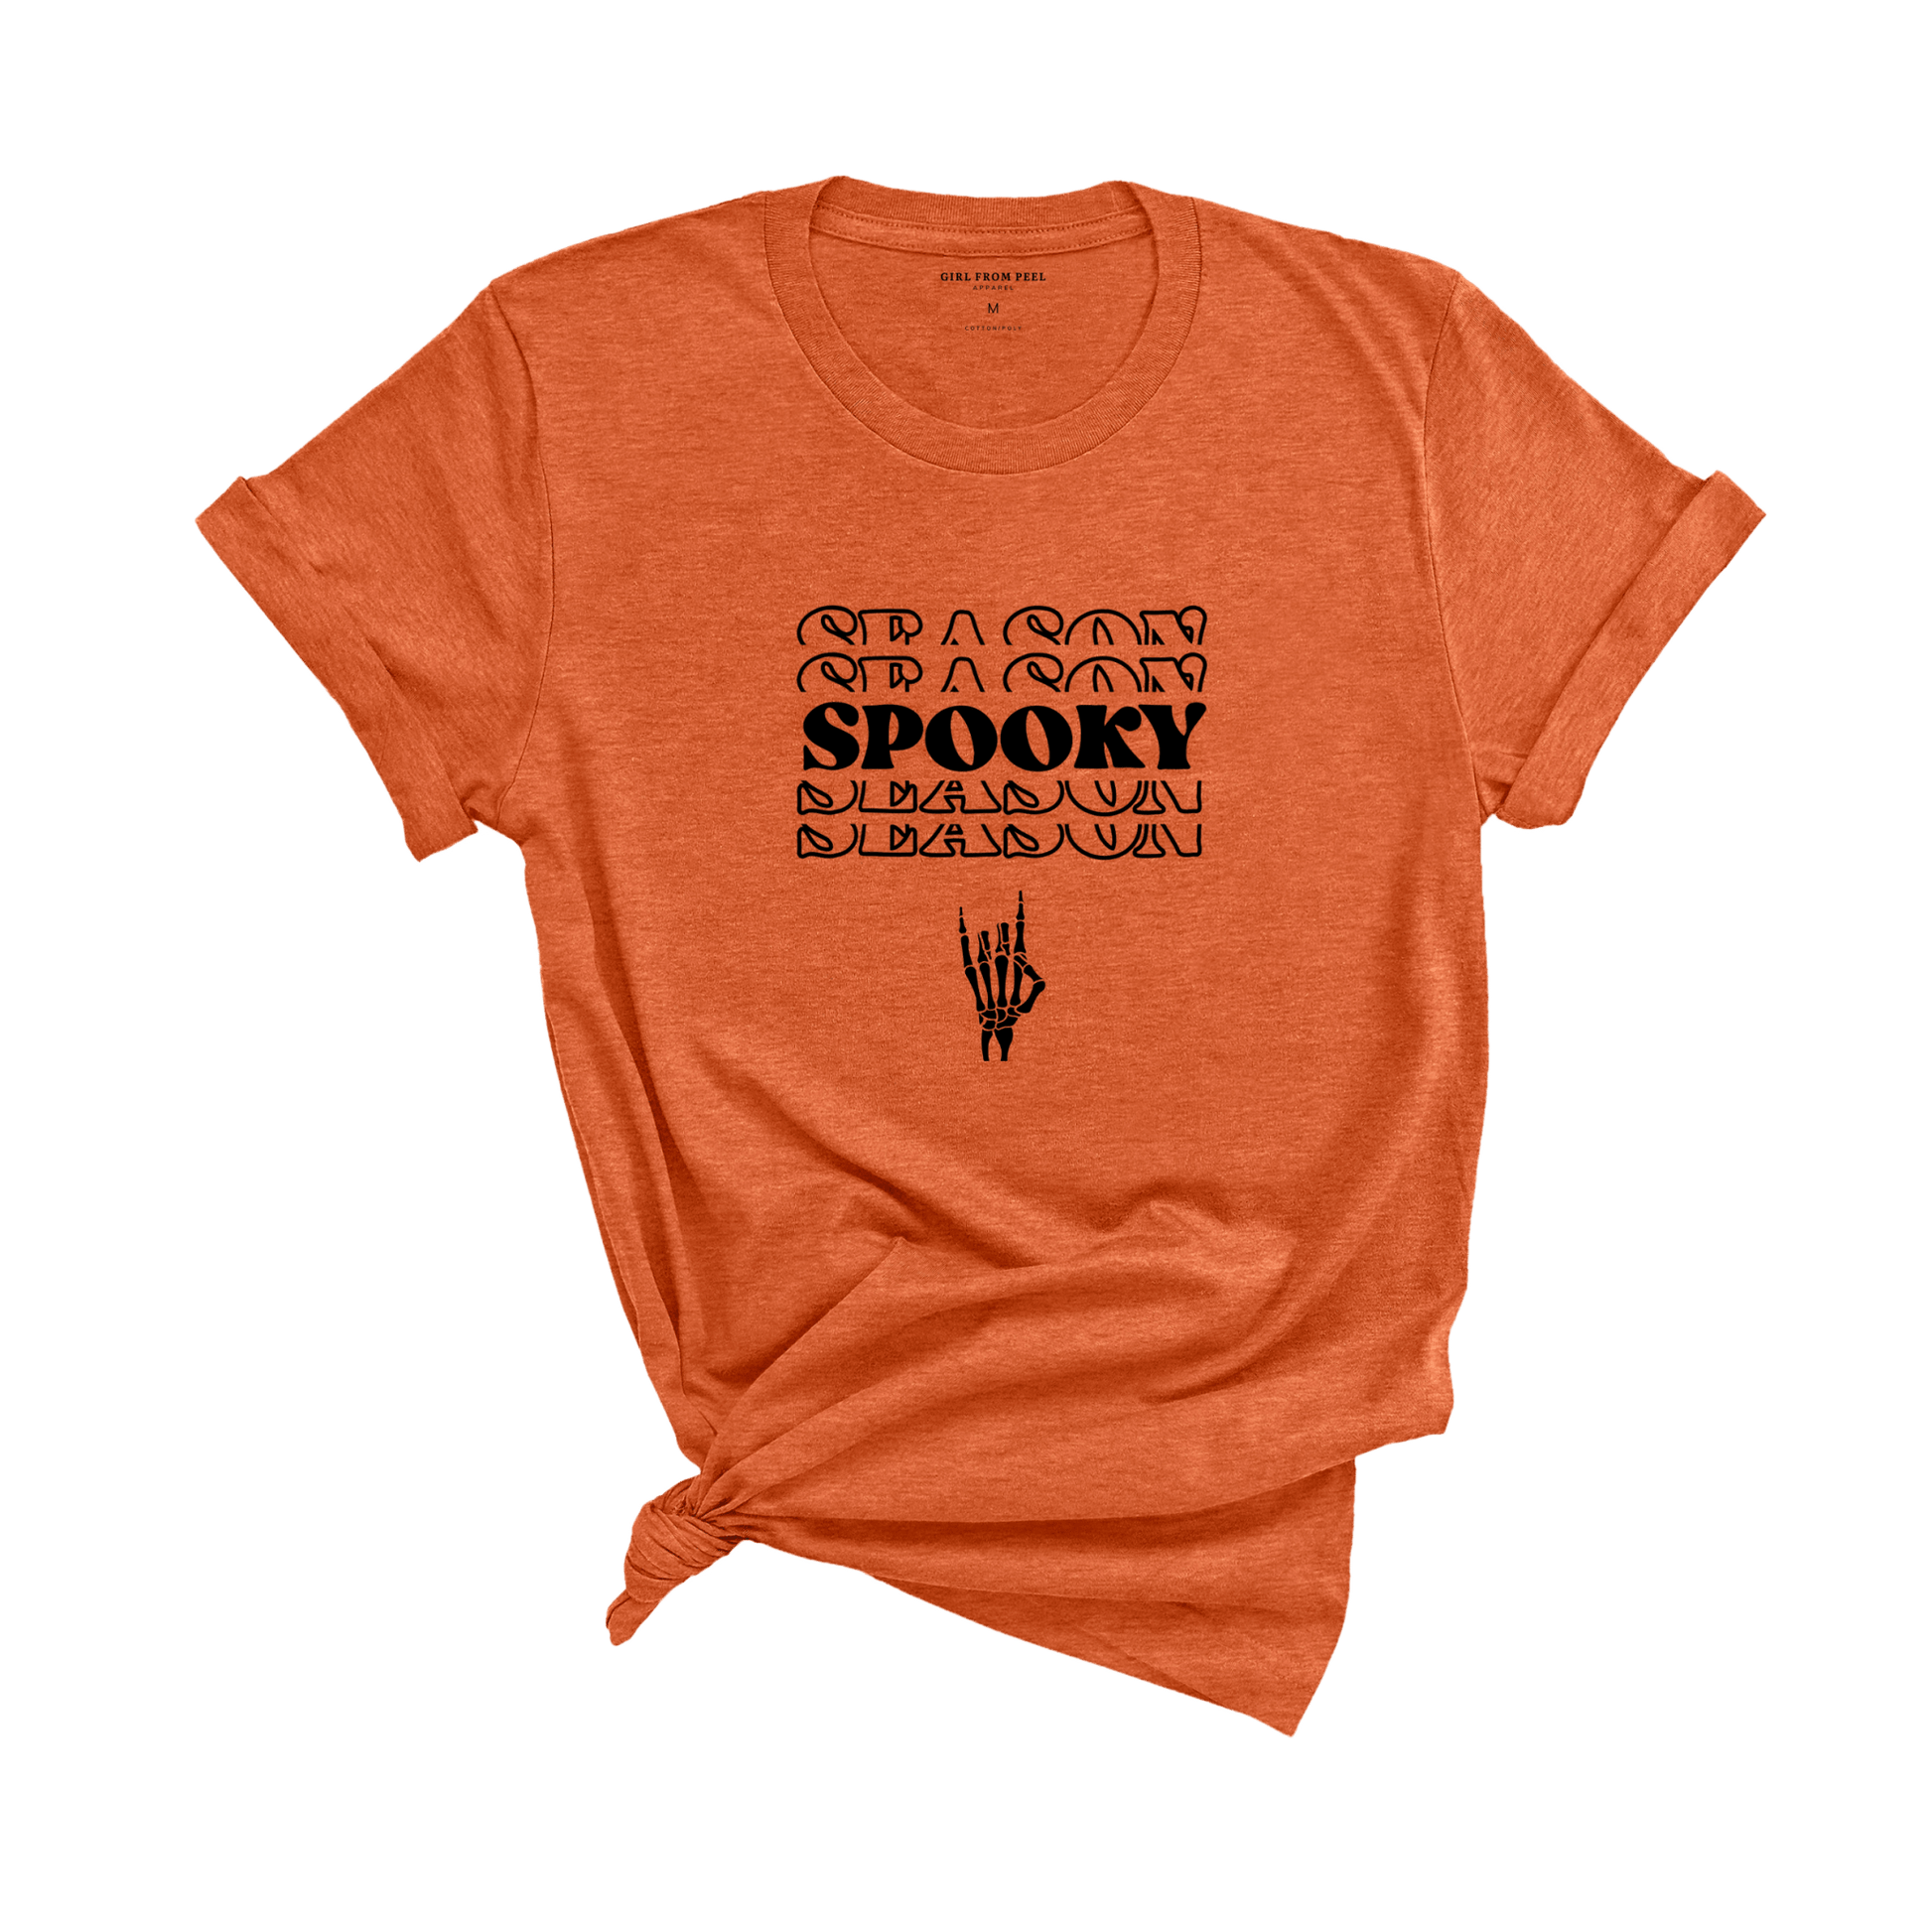 Spooky Season Tee - Girl From Peel Apparel - T-Shirt